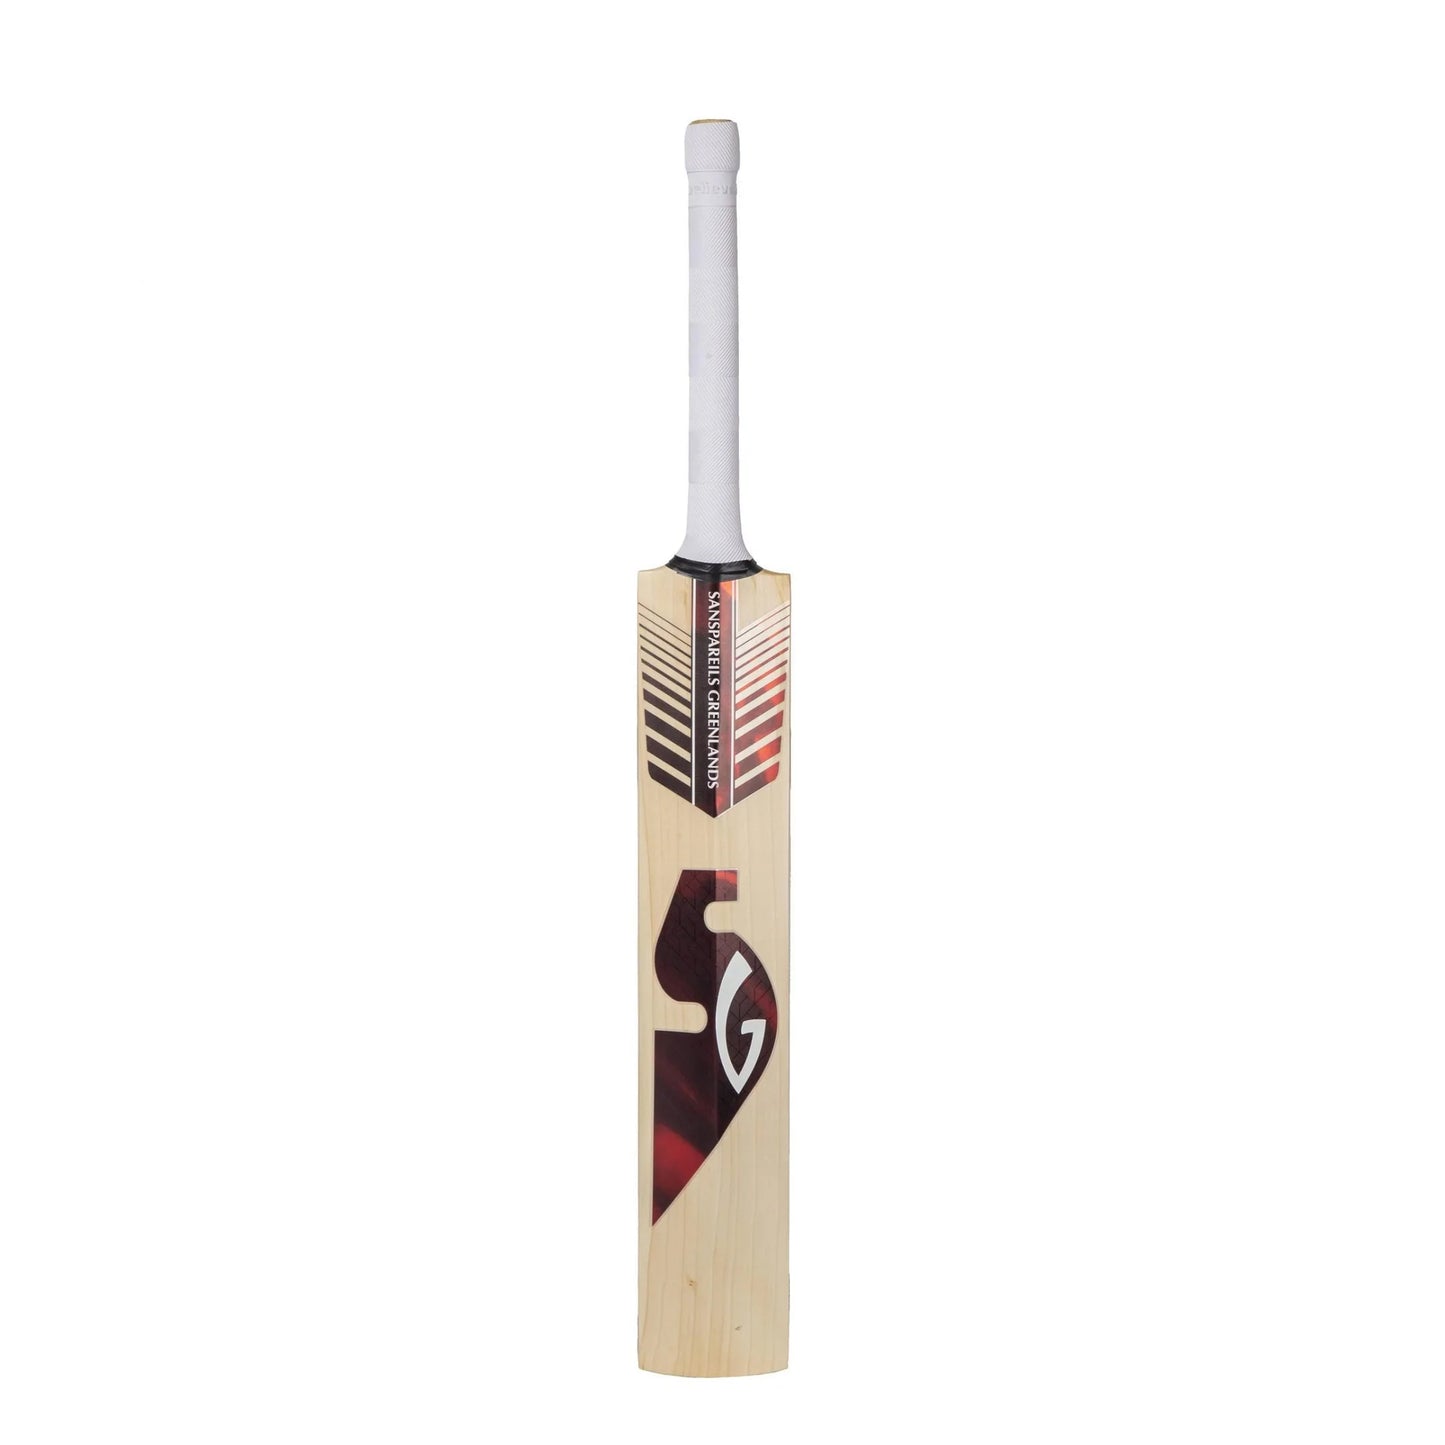 SG Cricket Bat Sunny Tonny Xtreme - Best Price online Prokicksports.com